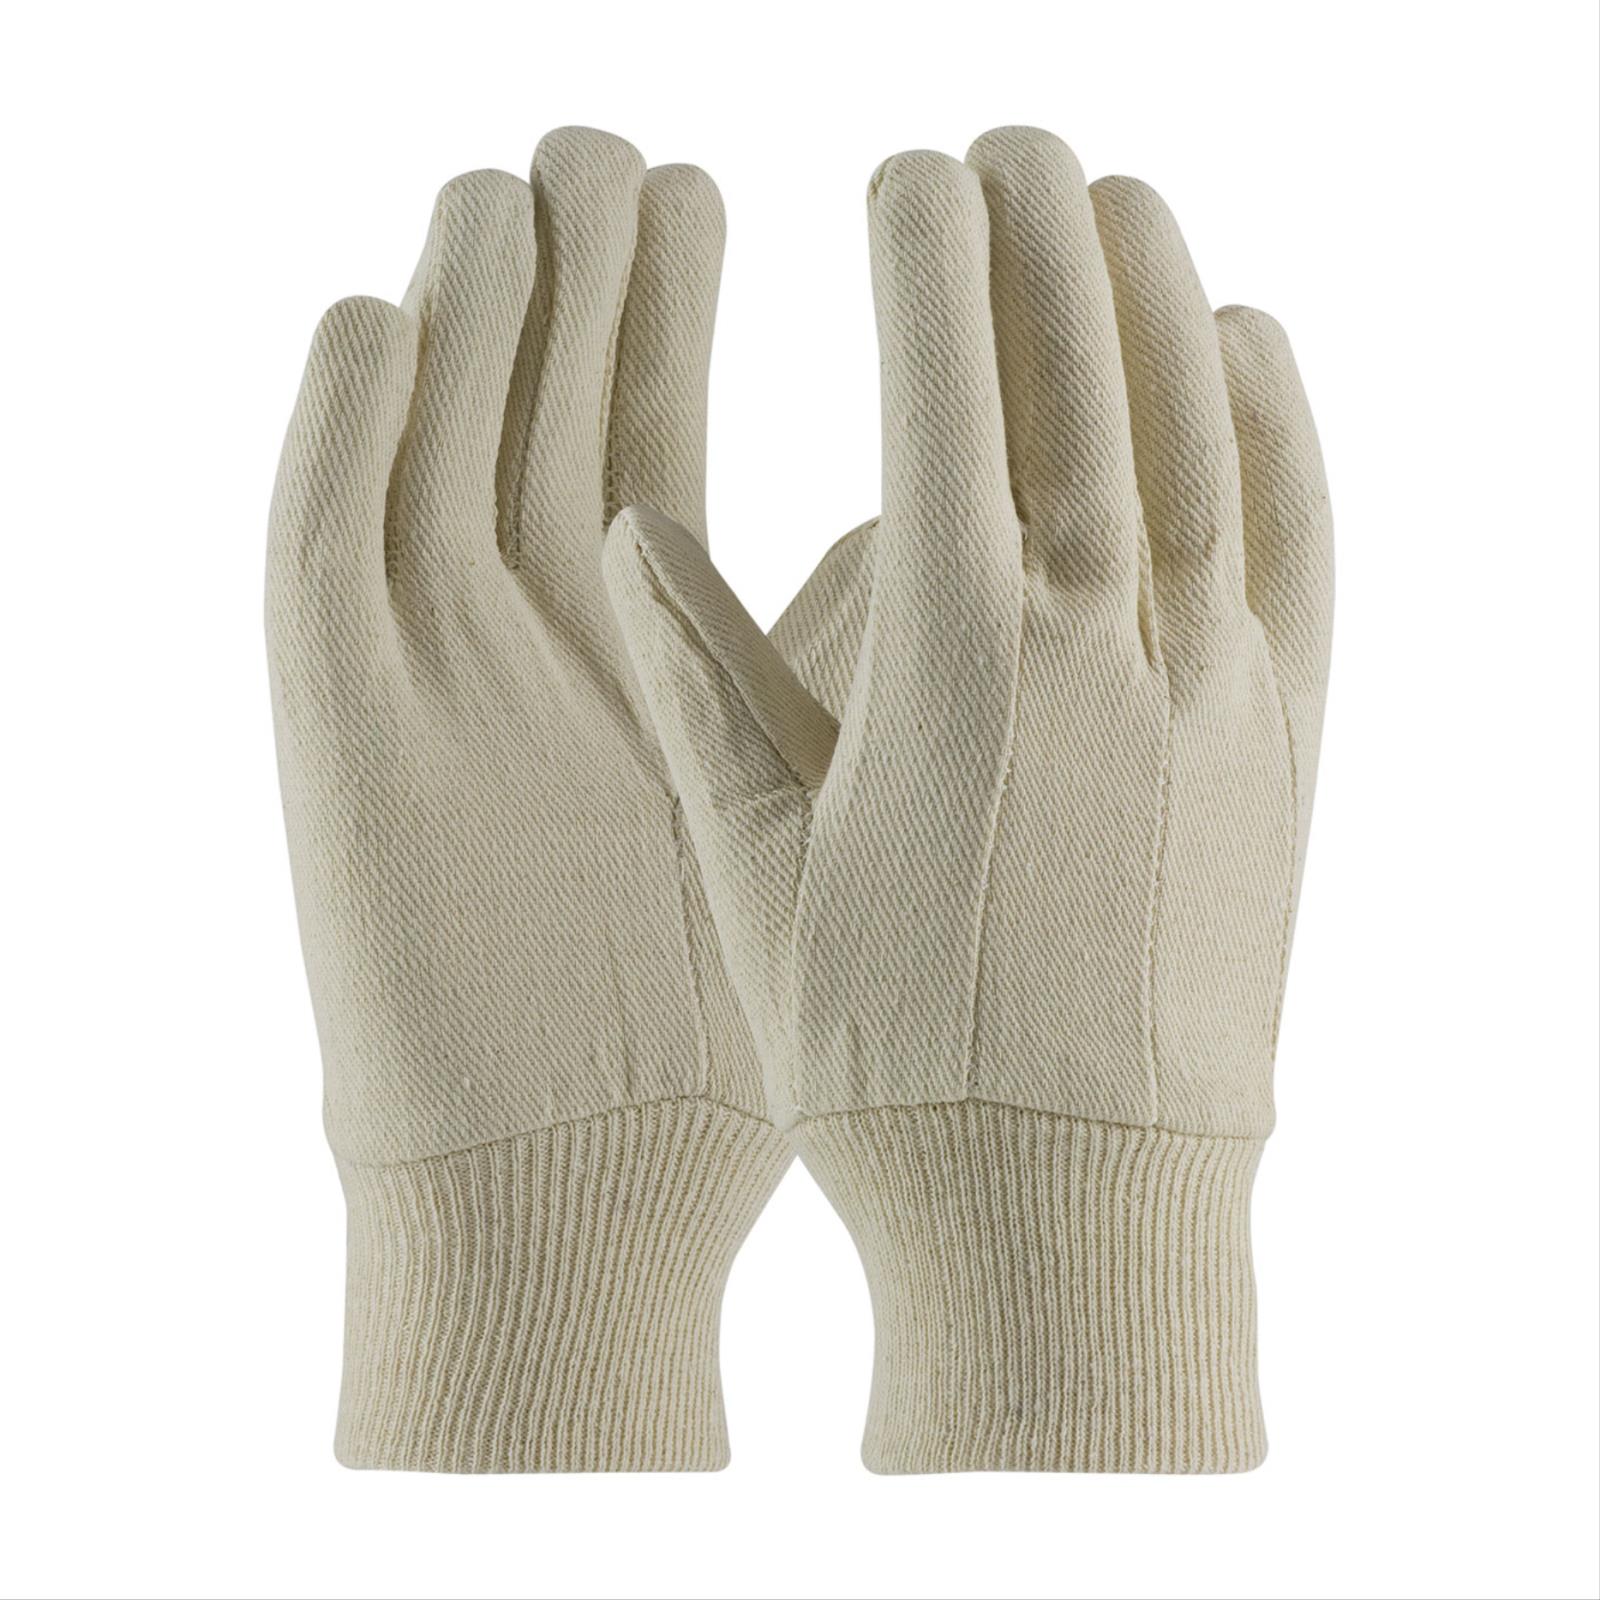 Economy Grade Cotton Canvas, Single Palm Gloves